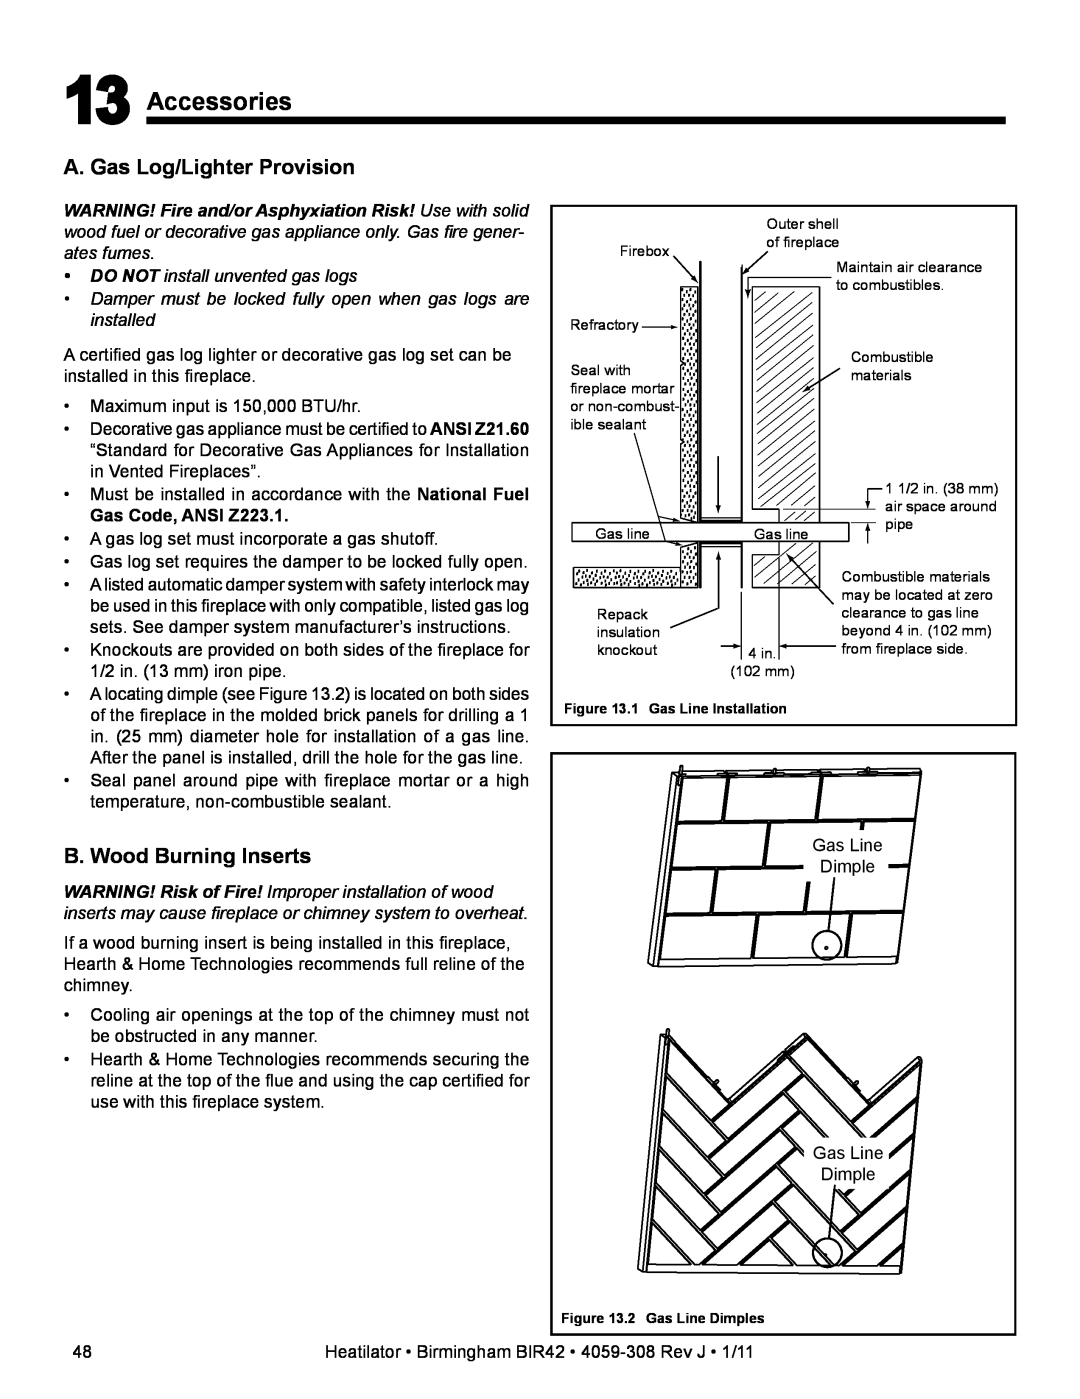 Heatiator BIR42 owner manual Accessories, A. Gas Log/Lighter Provision, B. Wood Burning Inserts, Gas Code, ANSI Z223.1 